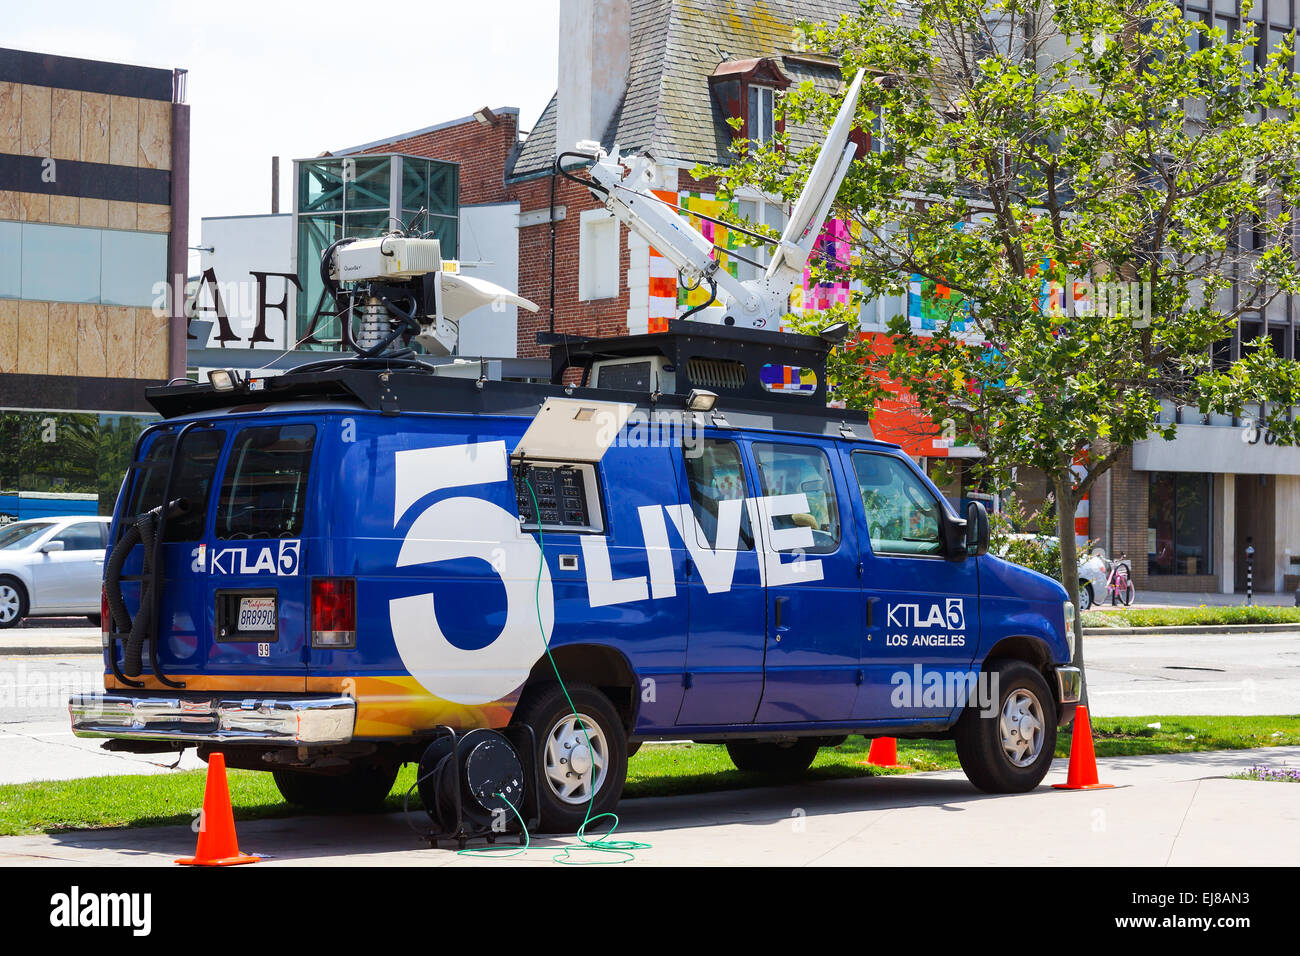 TV-Broadcast-Van in Los Angeles Stock Photo